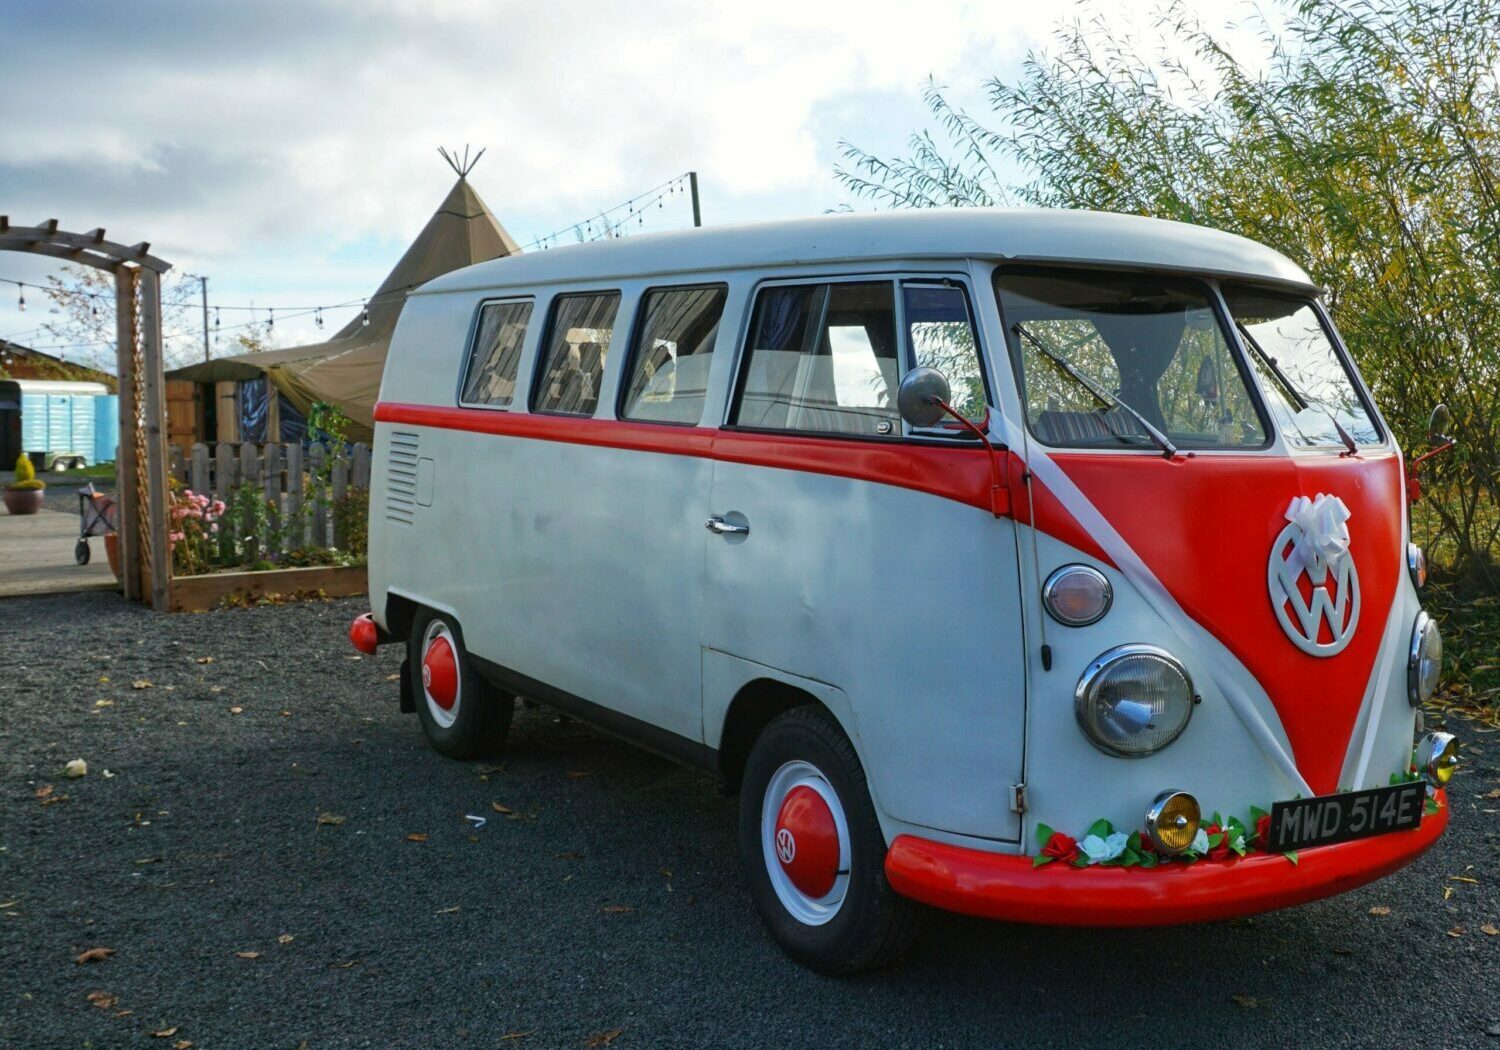 Red and cream split screen campervan wedding car at vallum farm wedding